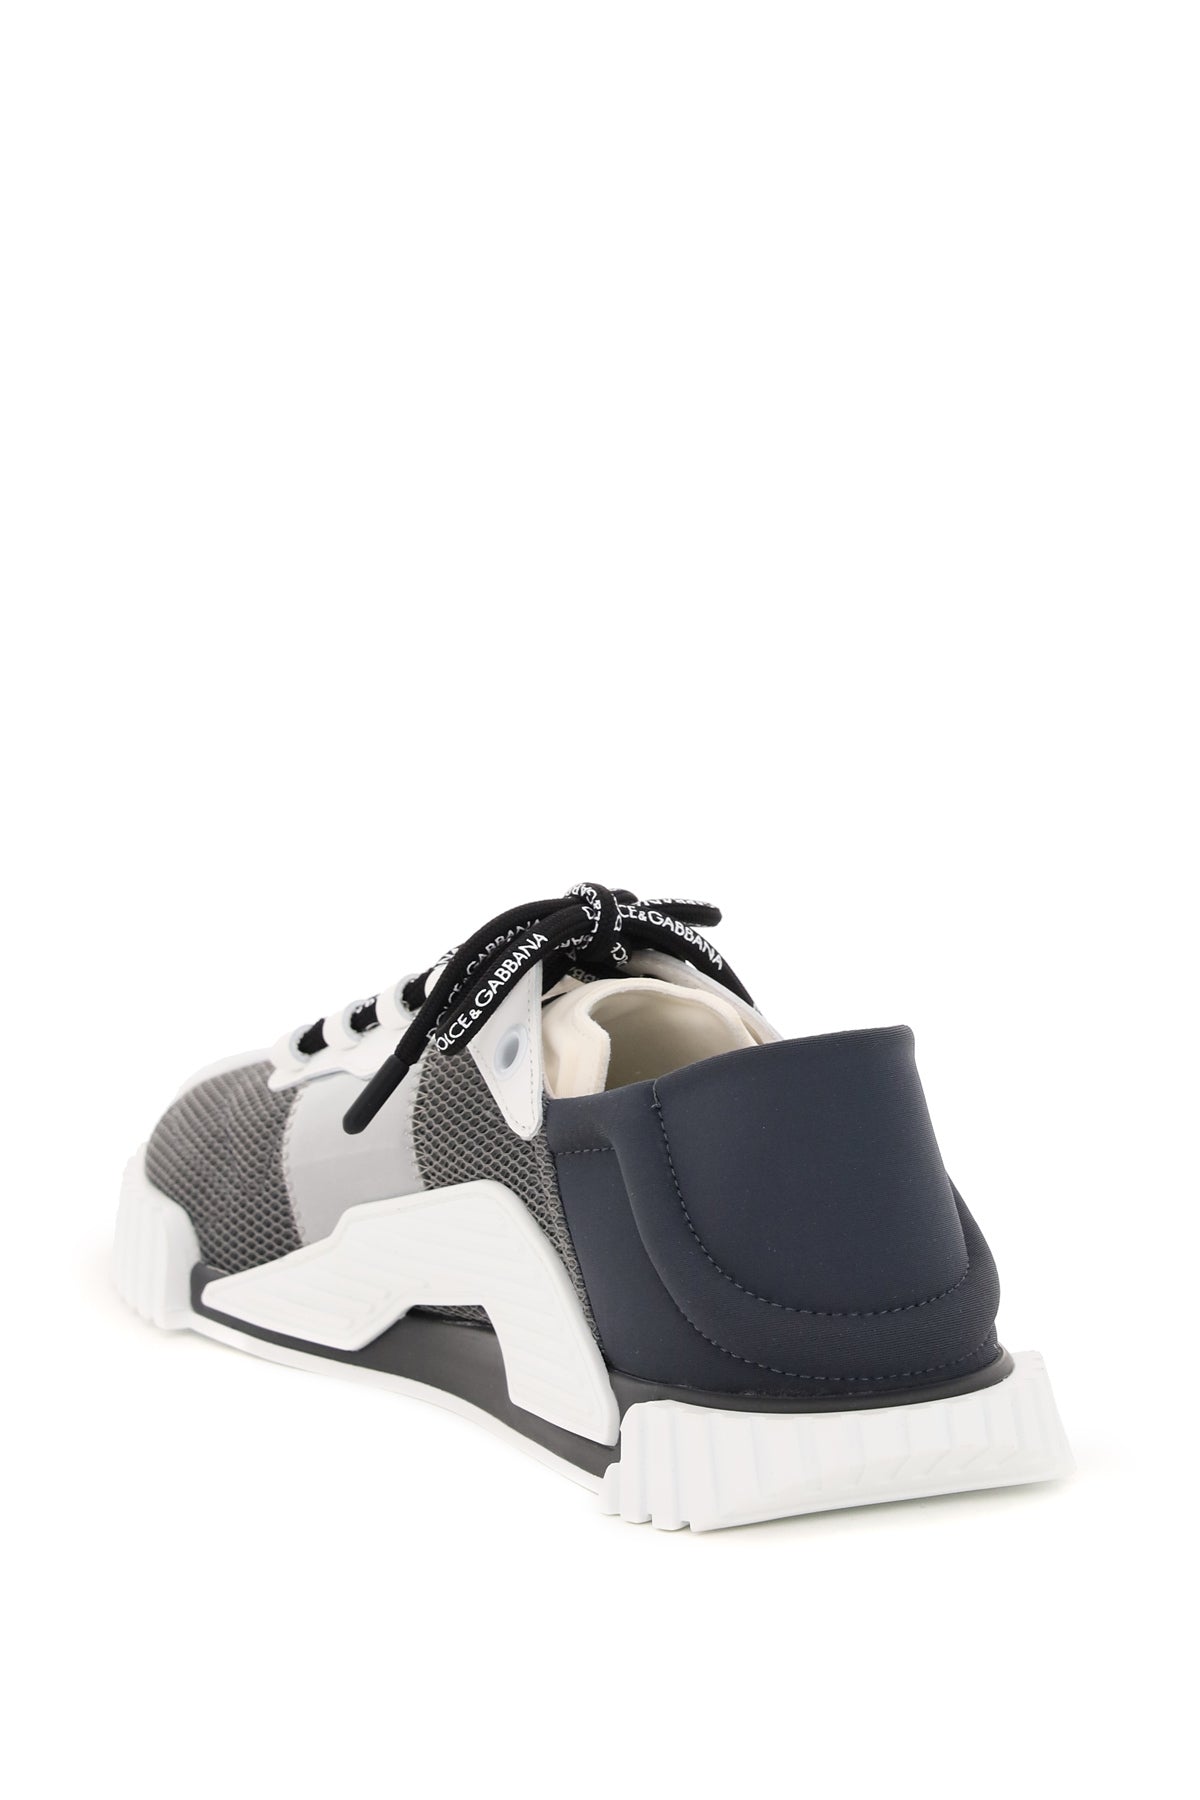 Dolce & Gabbana Ns1 Sneakers   White